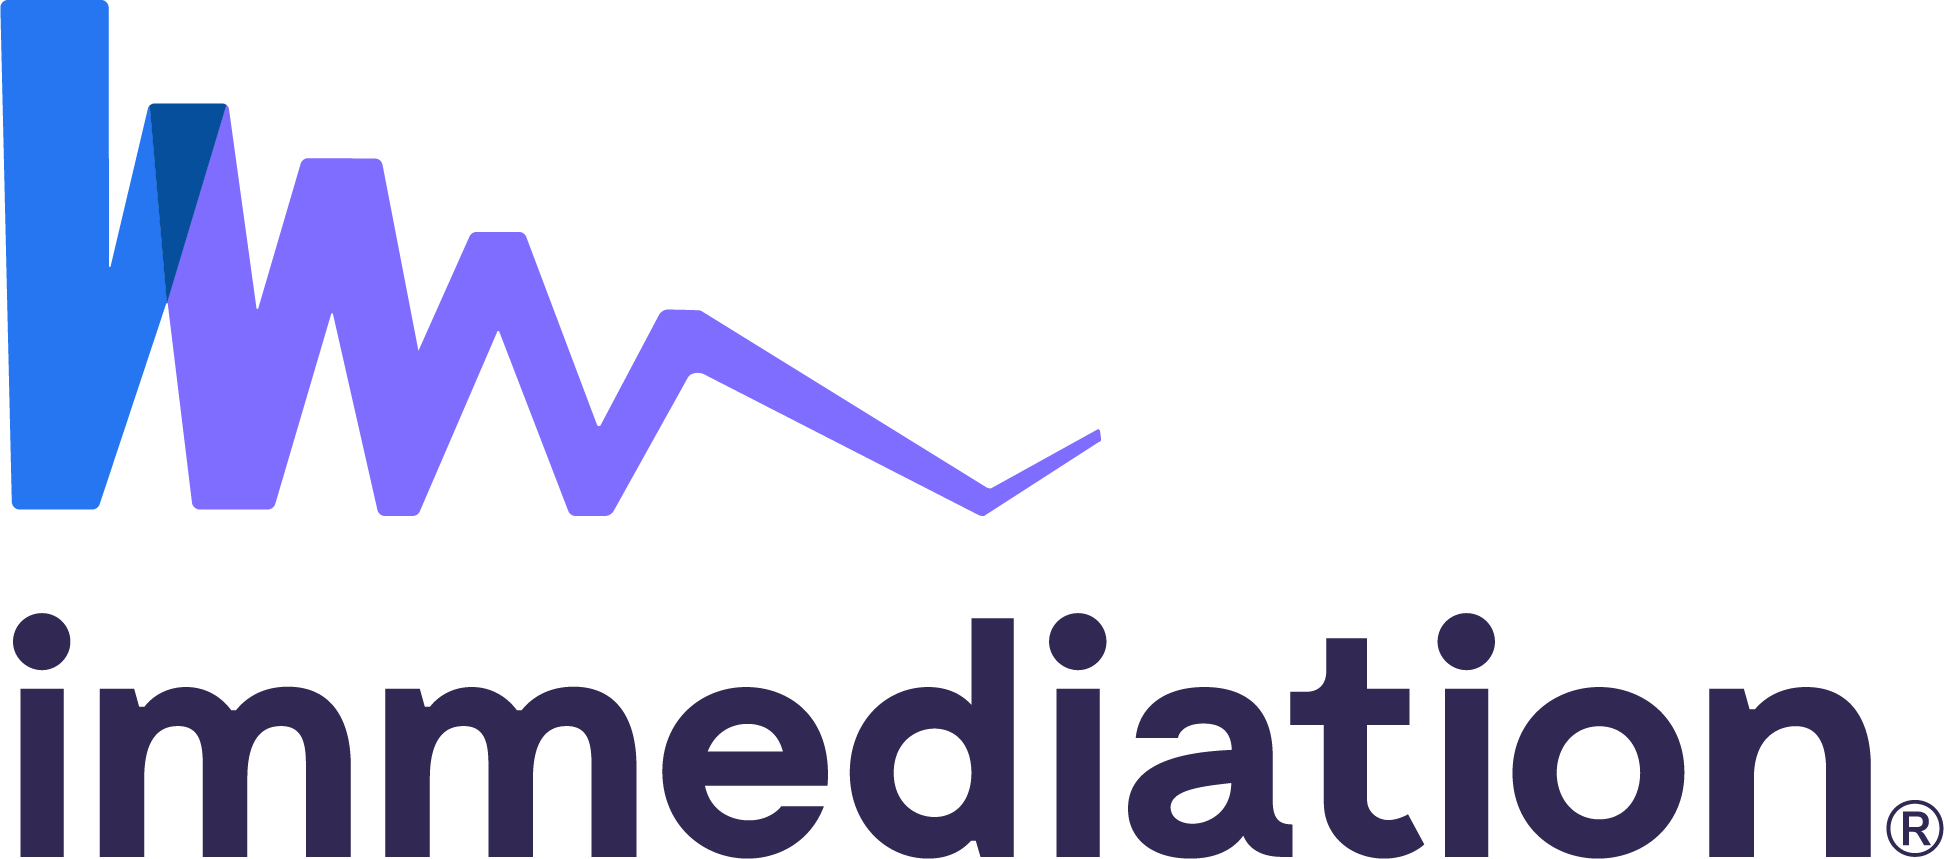 immediation logo